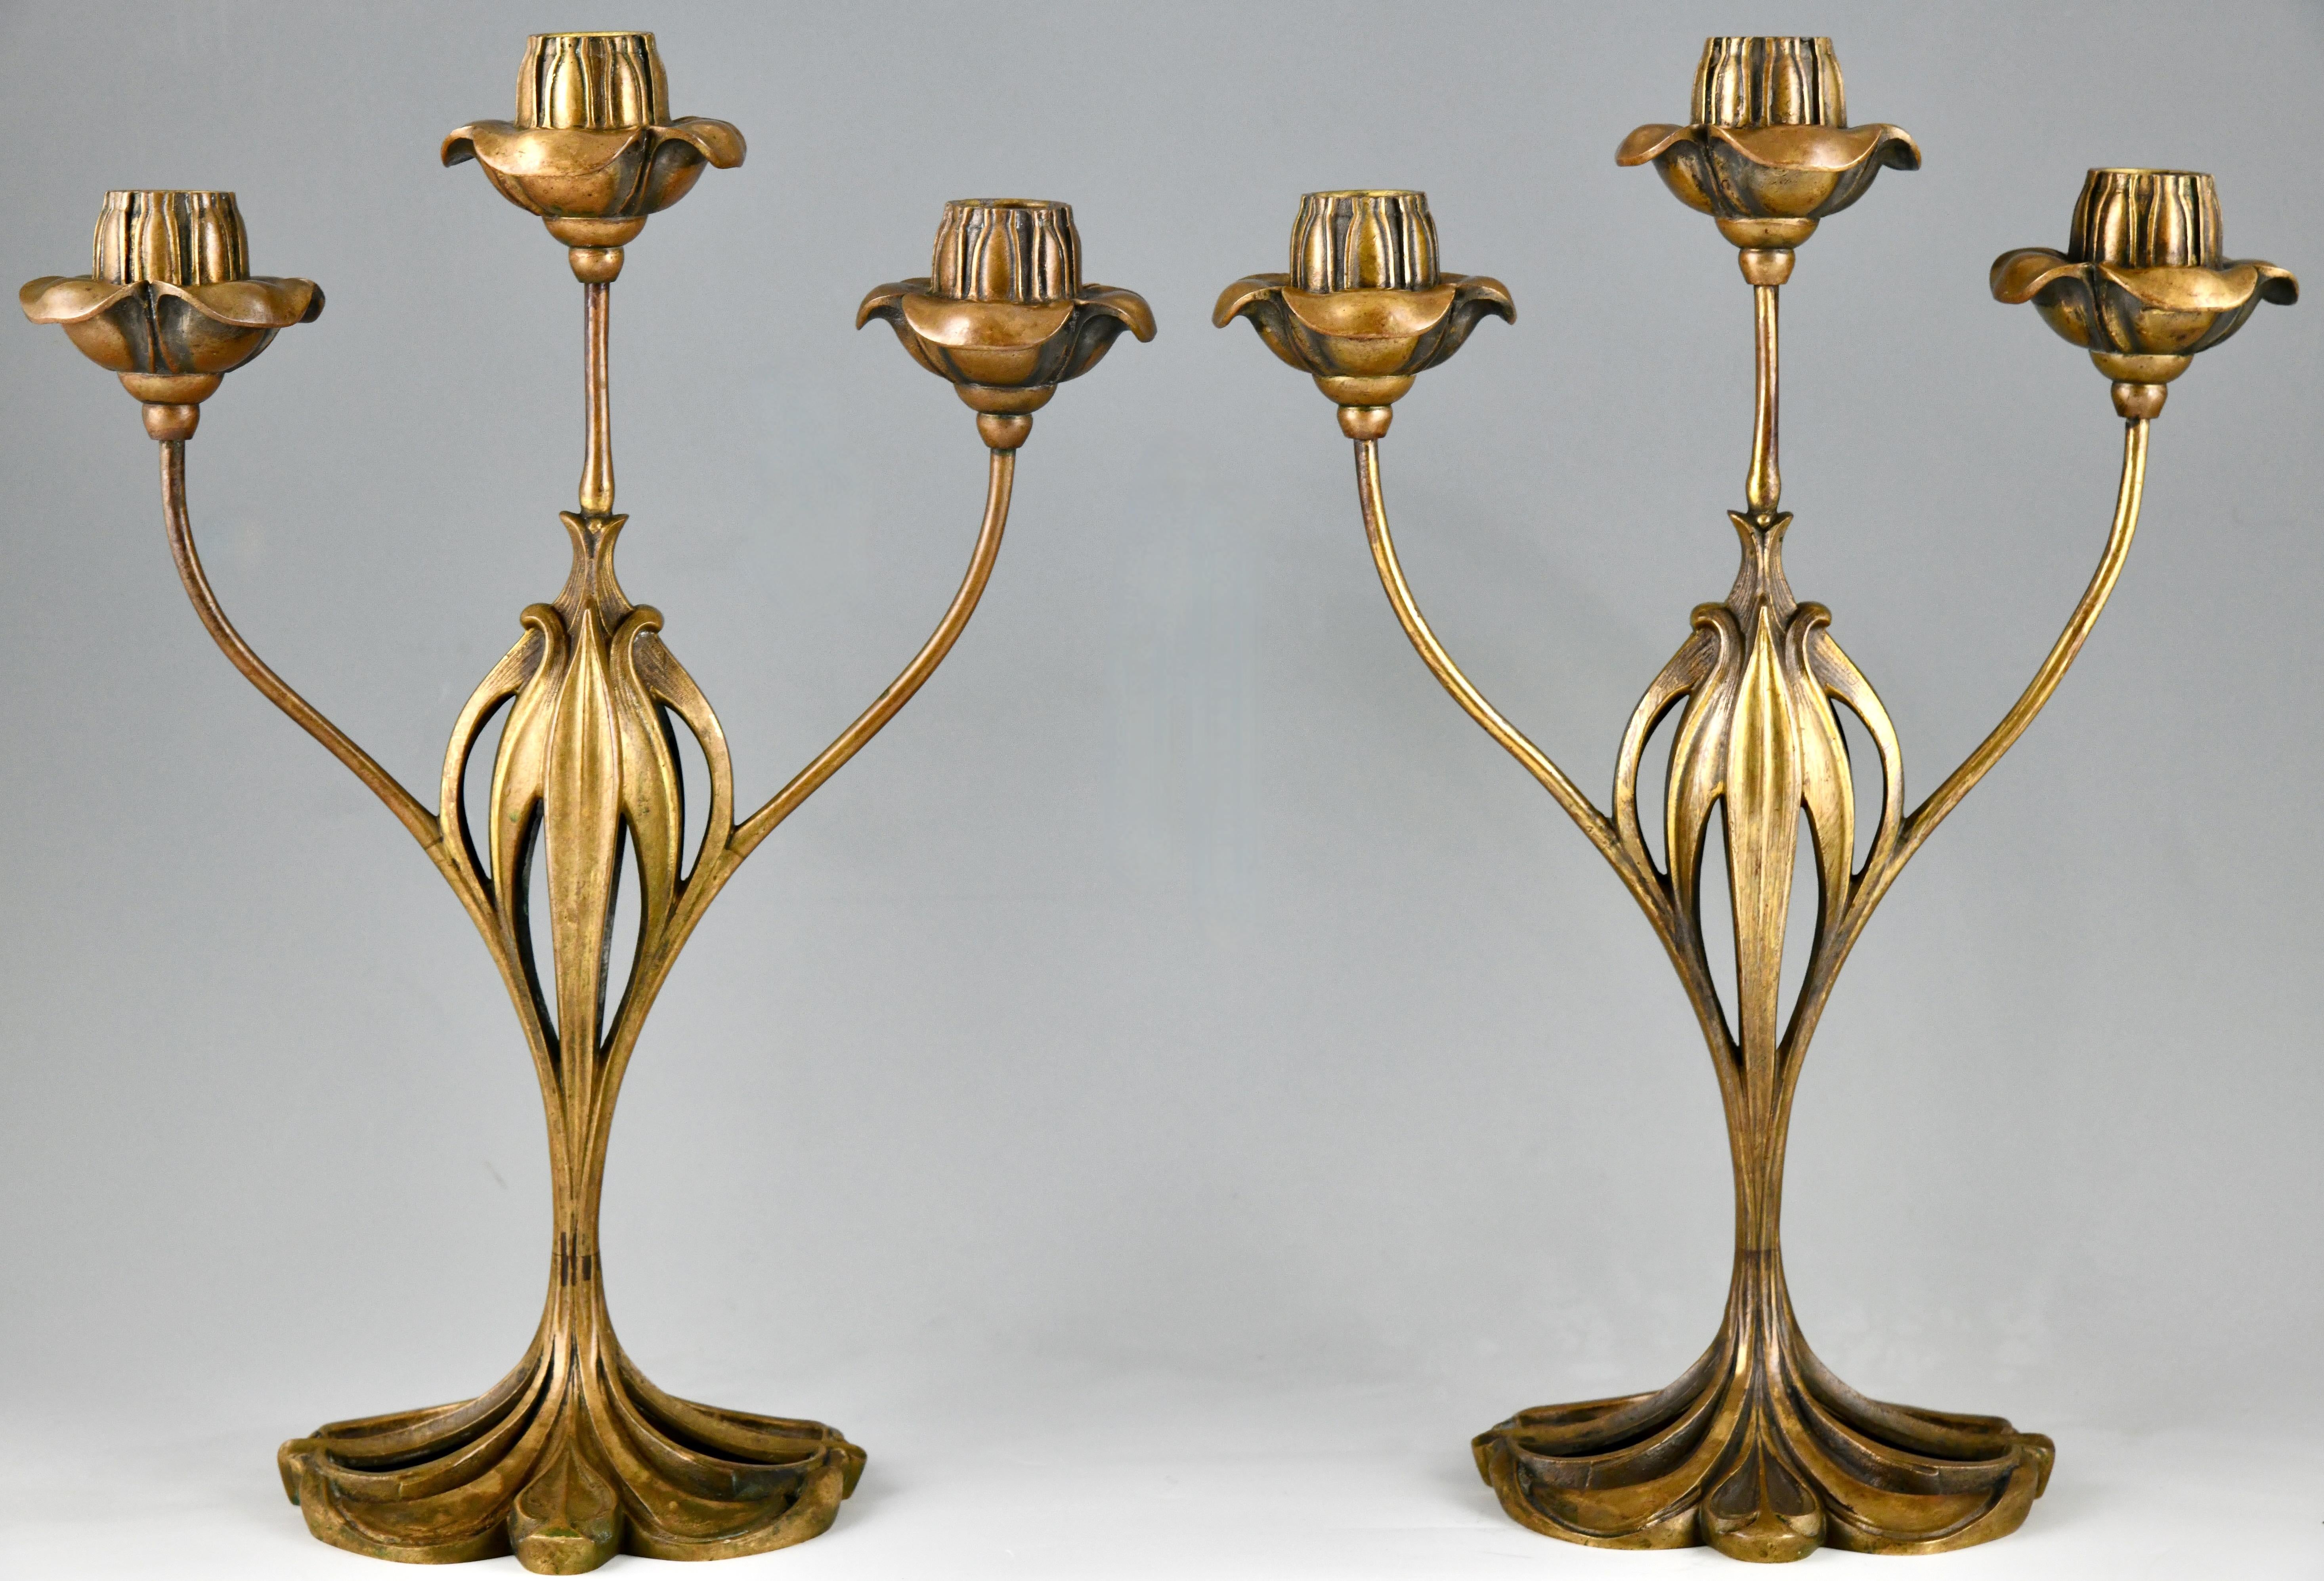 Patinated Pair of bronze Art Nouveau candelabra with floral design by Georges de Feure